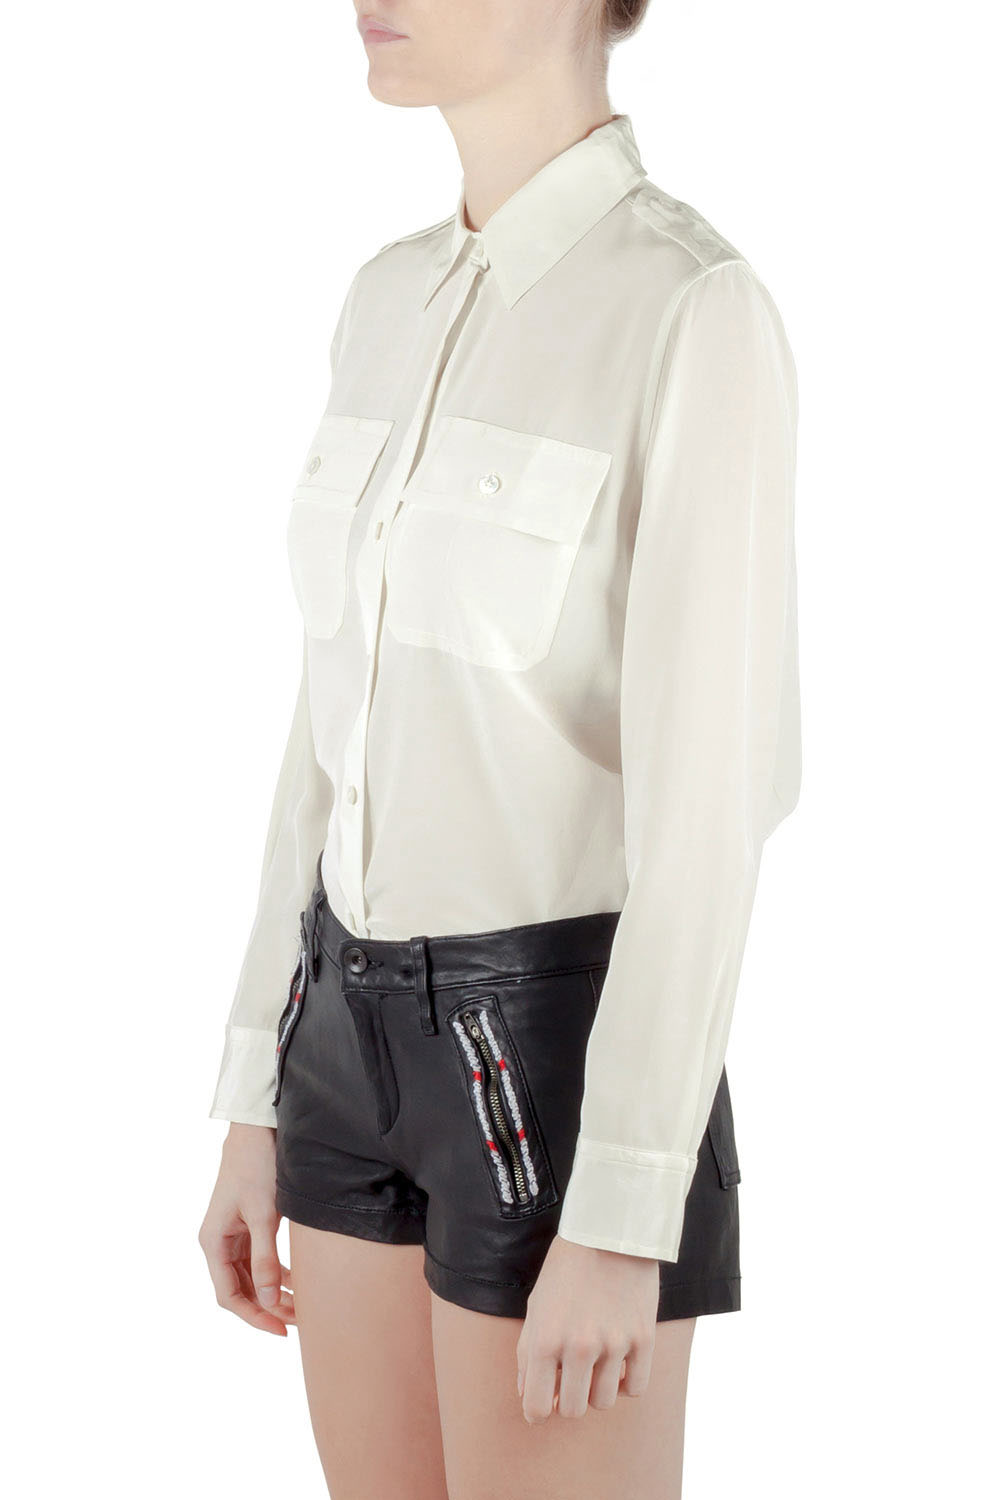 

Marc Jacobs Ivory Silk Epaulette Detail Button Front Shirt, Cream